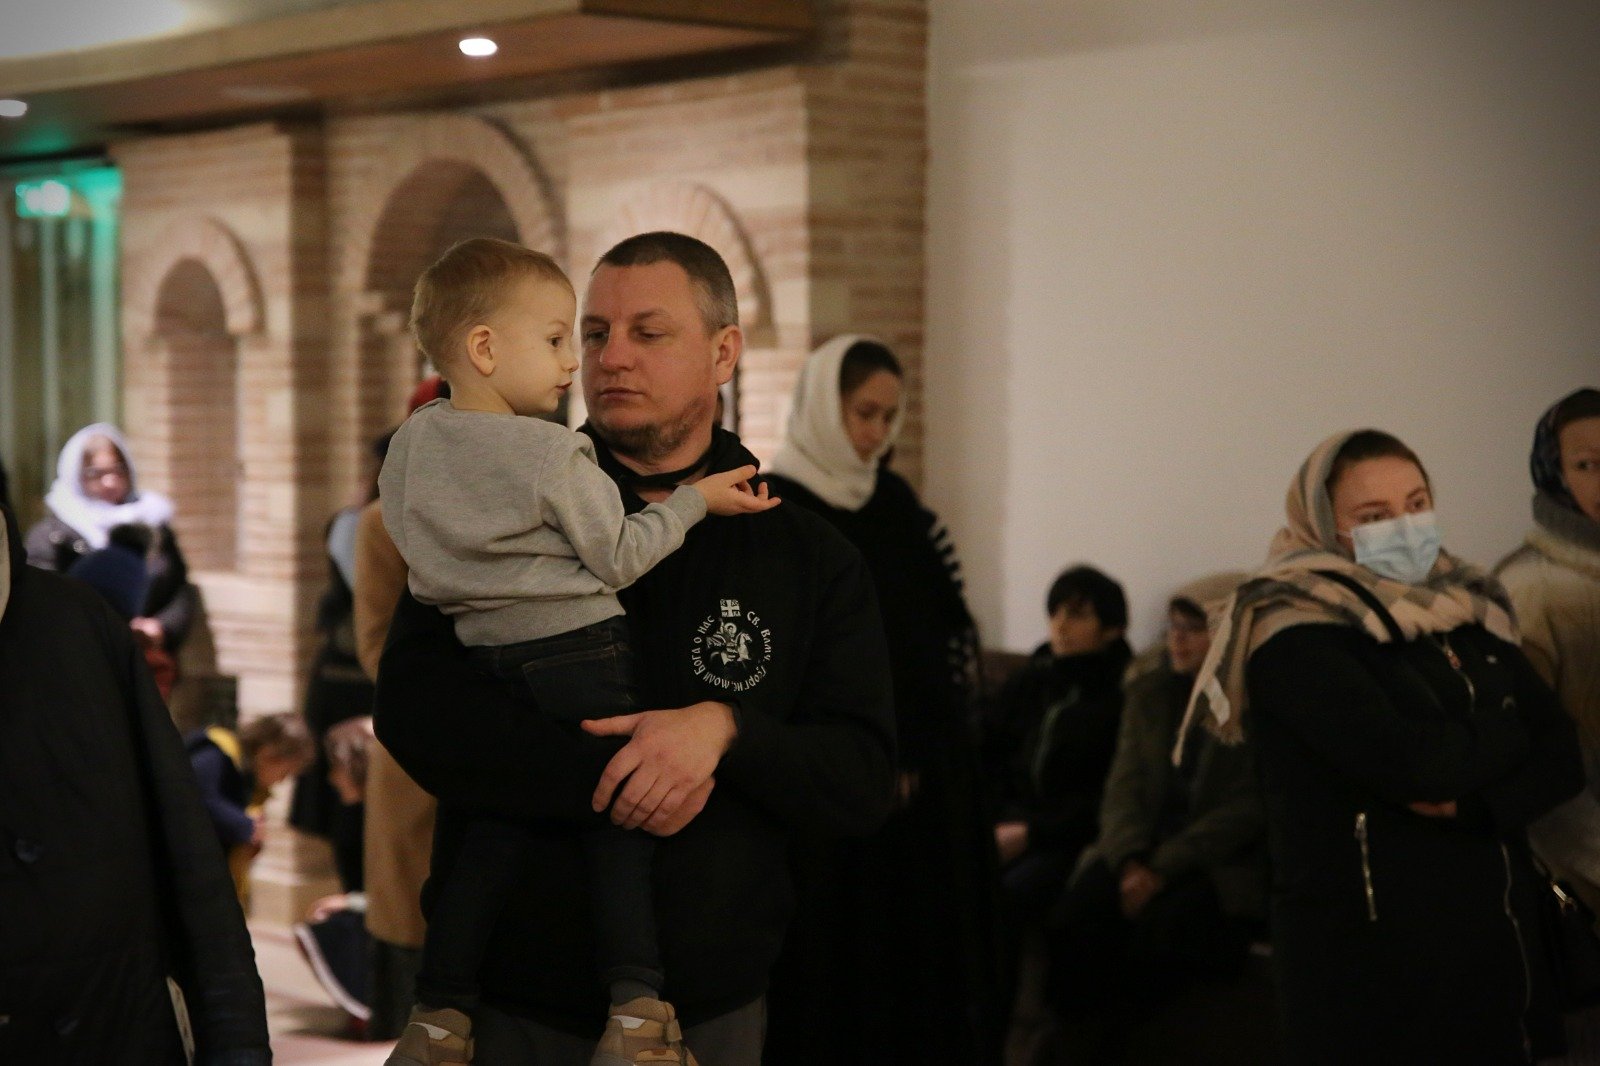  FOTO Eveniment emoţionant la care a participat şi un preot ucrainean refugiat